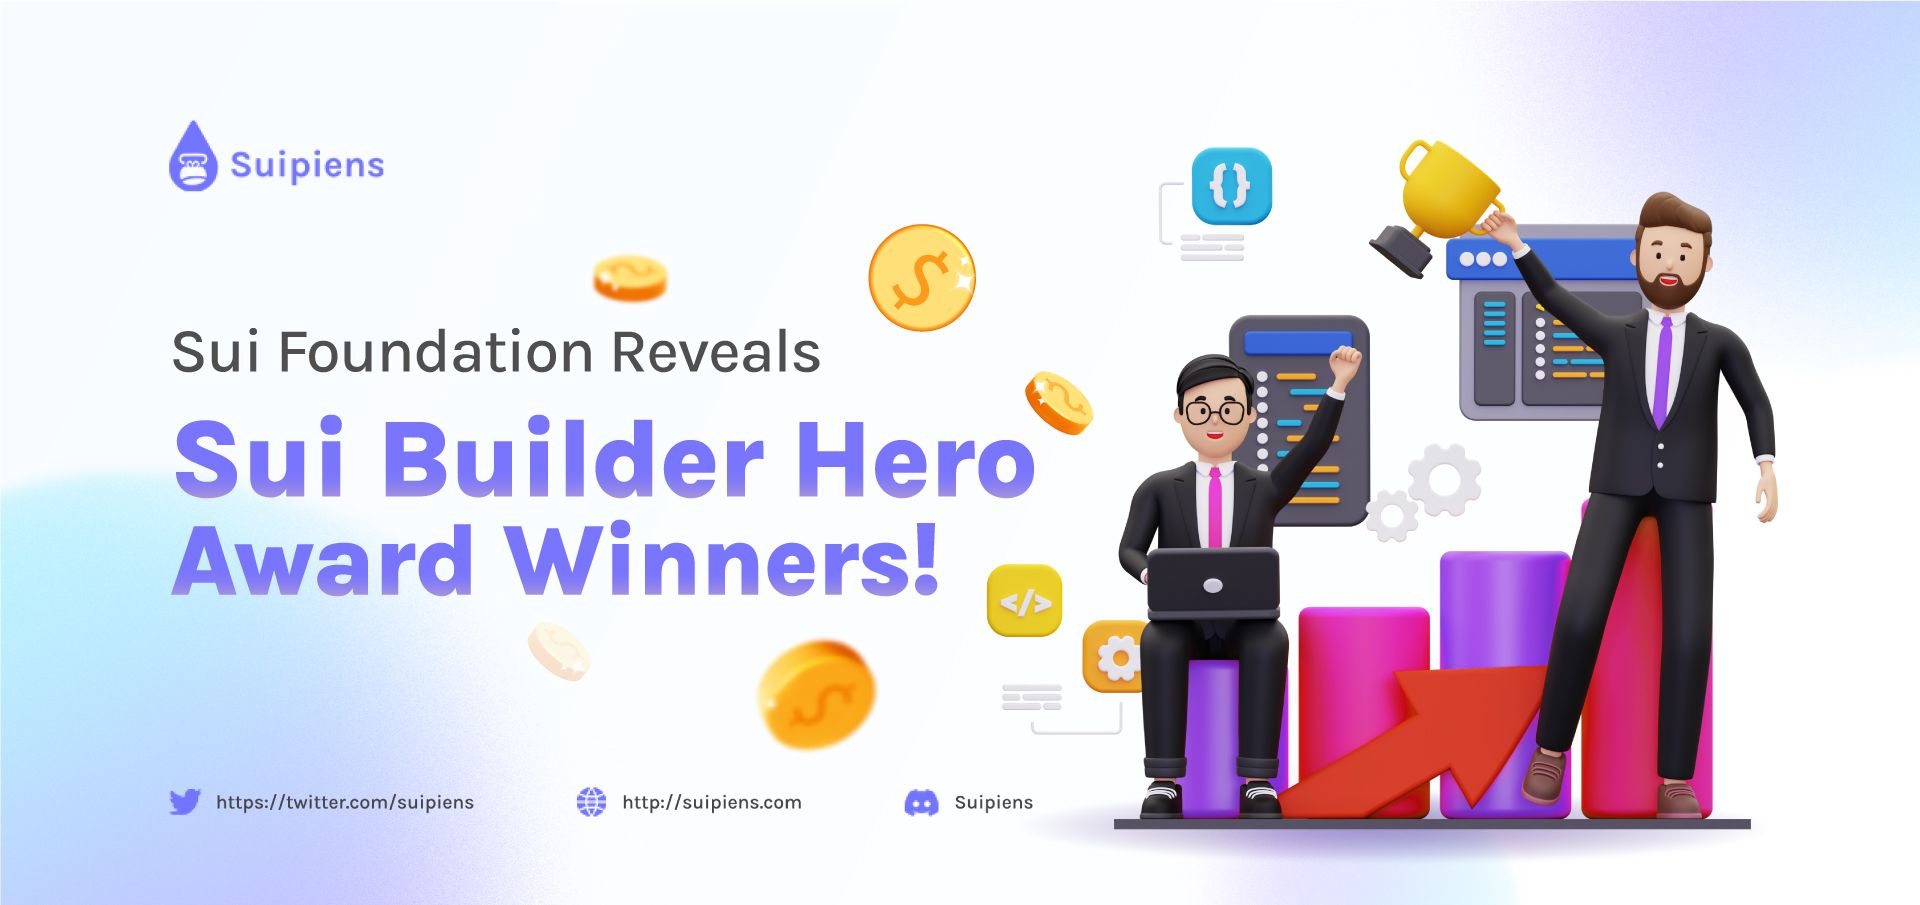 Sui Foundation Reveals Sui Builder Hero Award Winners!